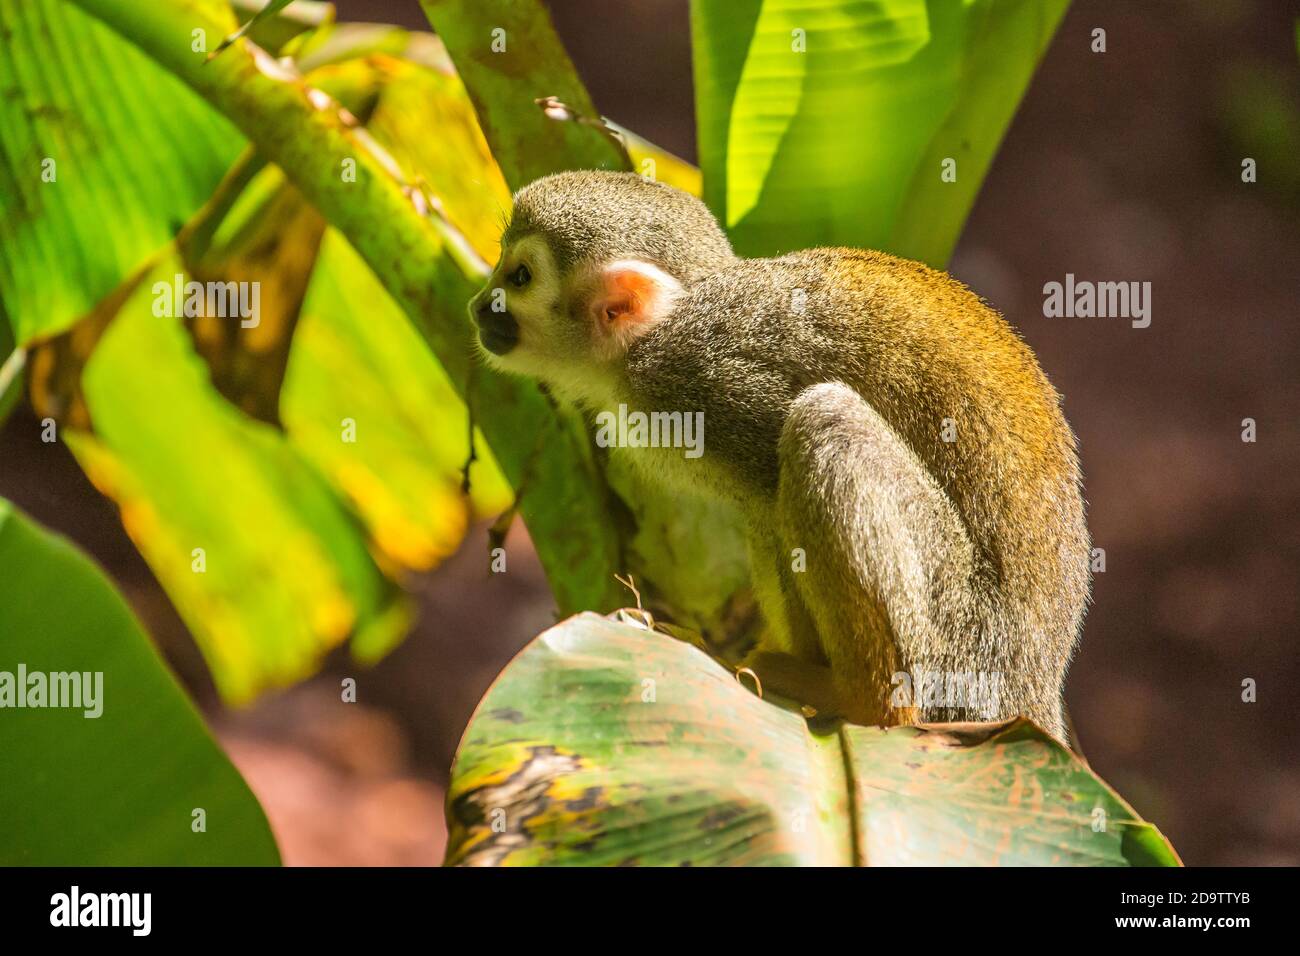 Free-roaming Common Squirrel Monkeys, Saimiri sciureus, in a nature reserve  in the rainforest of the Dominican Republic. Native to the Amazon Basin  Stock Photo - Alamy